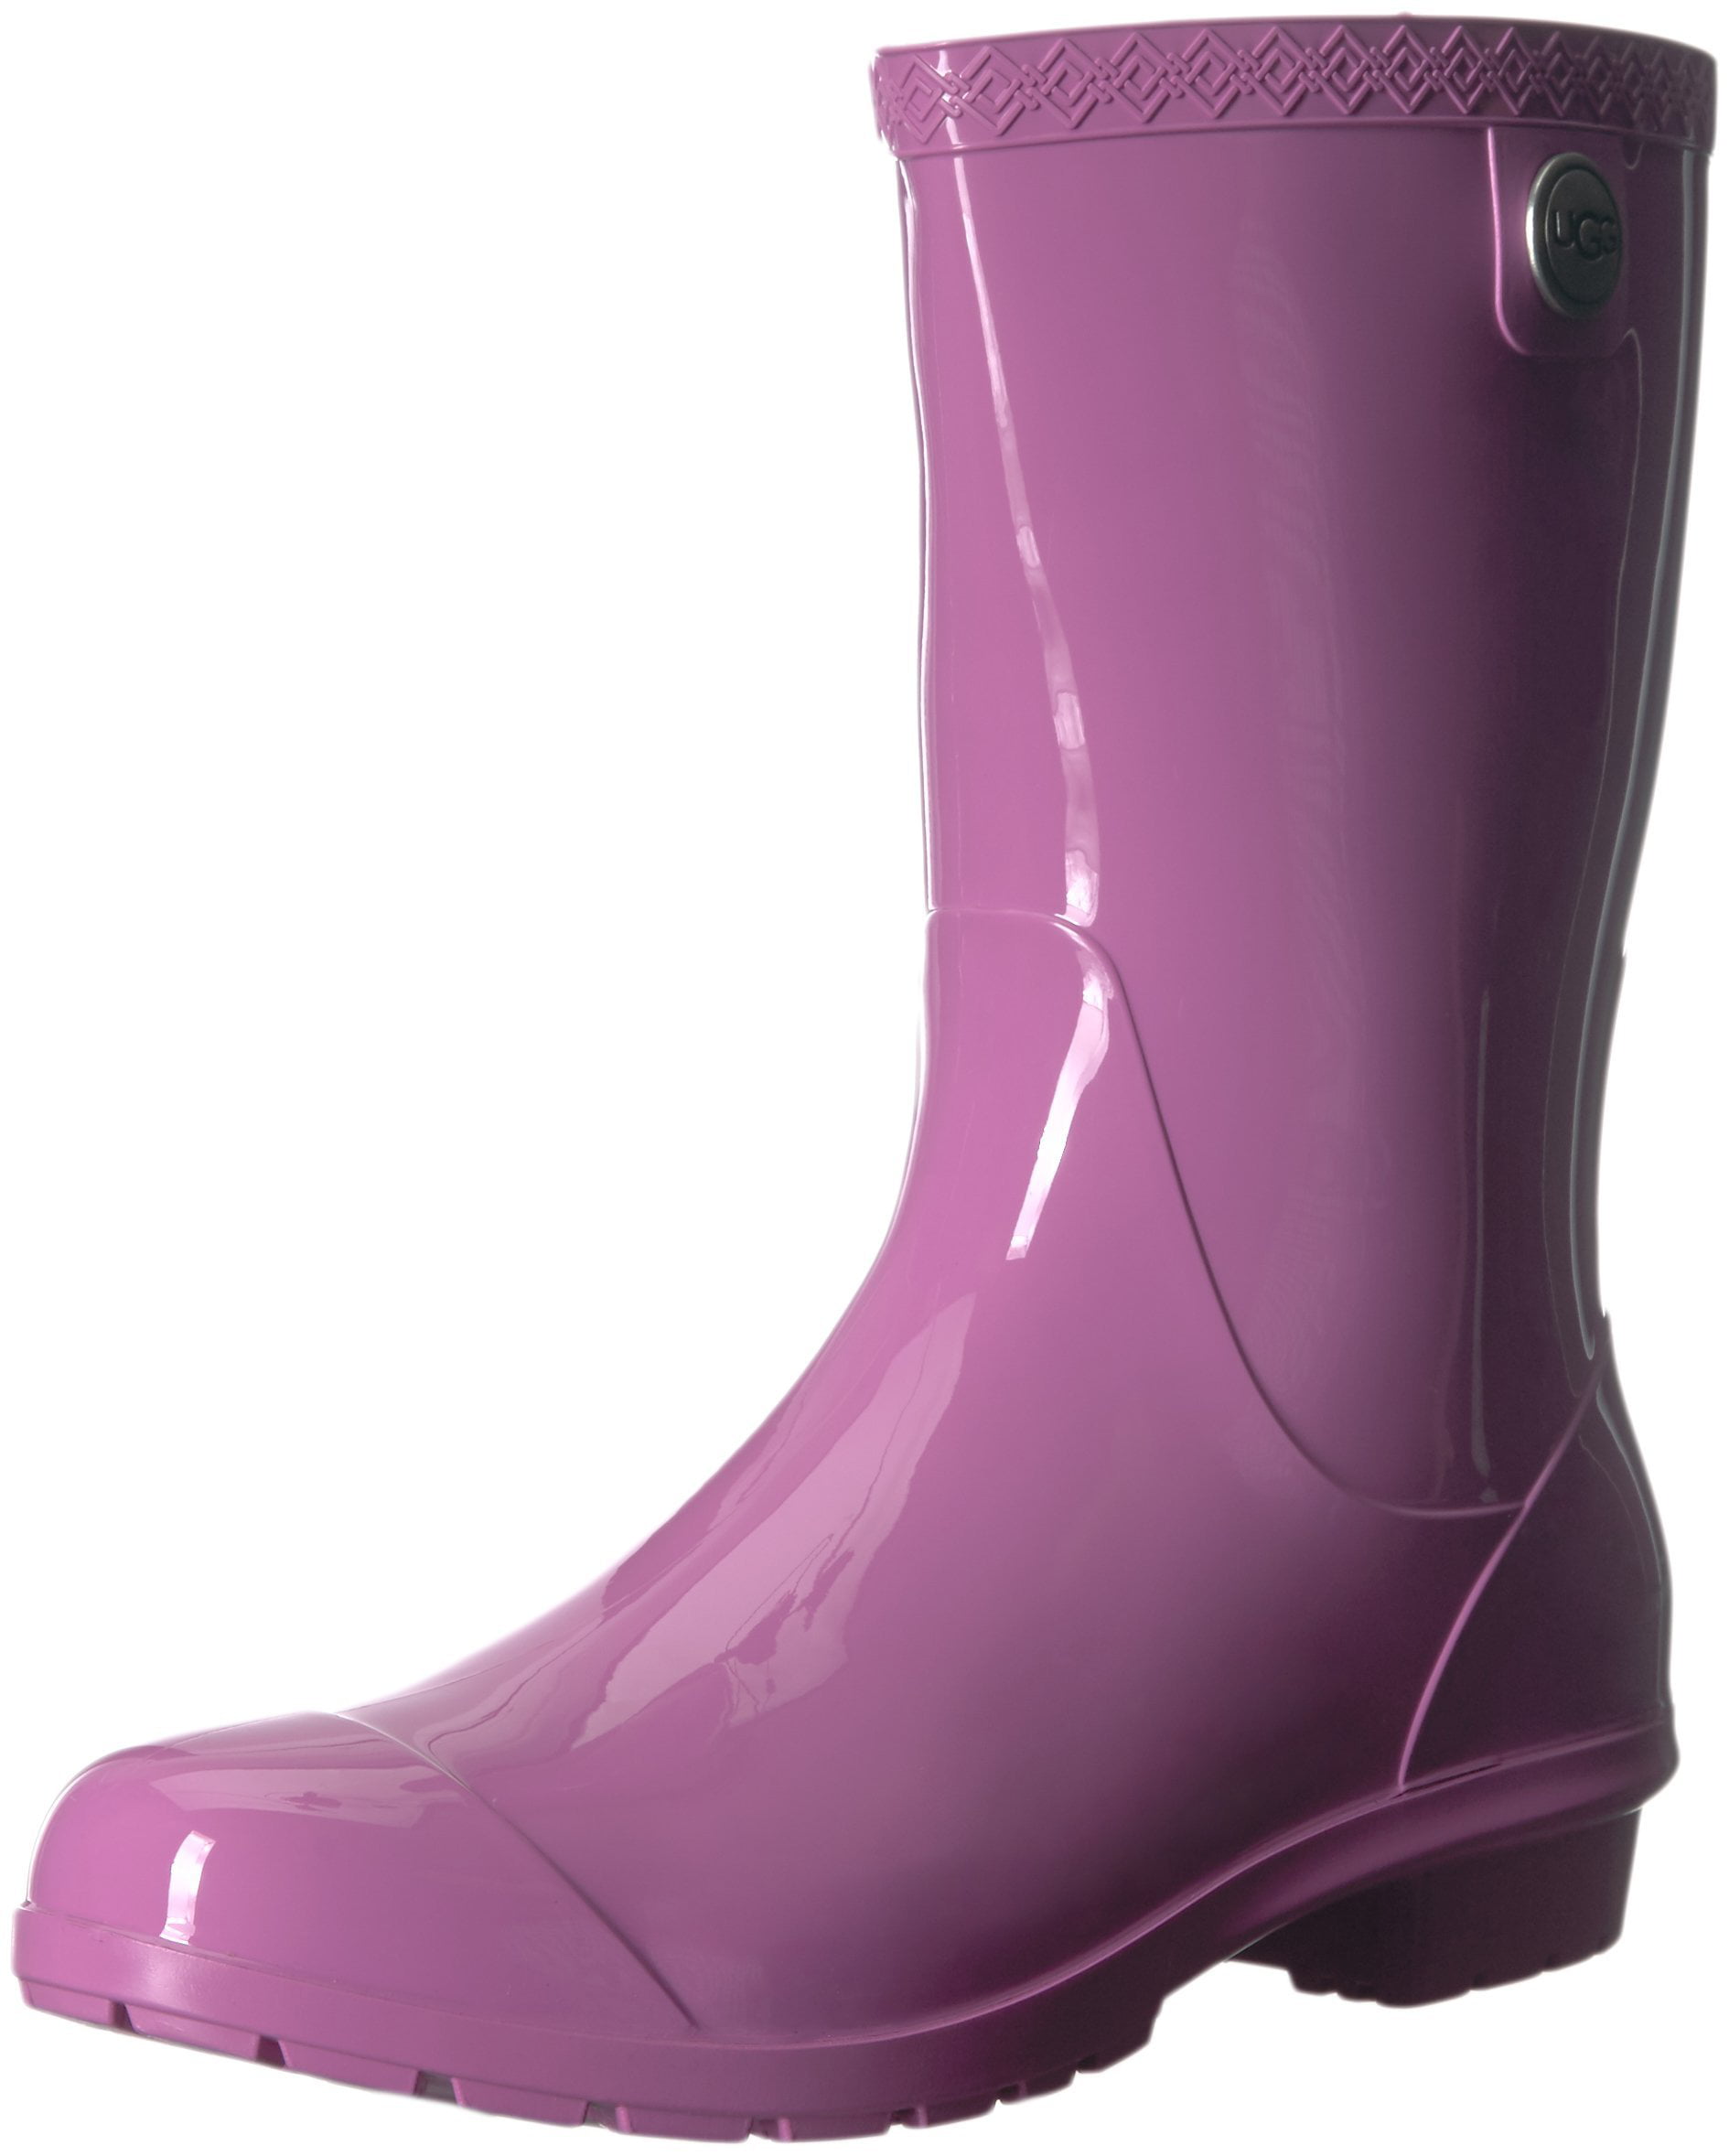 purple ugg rain boots